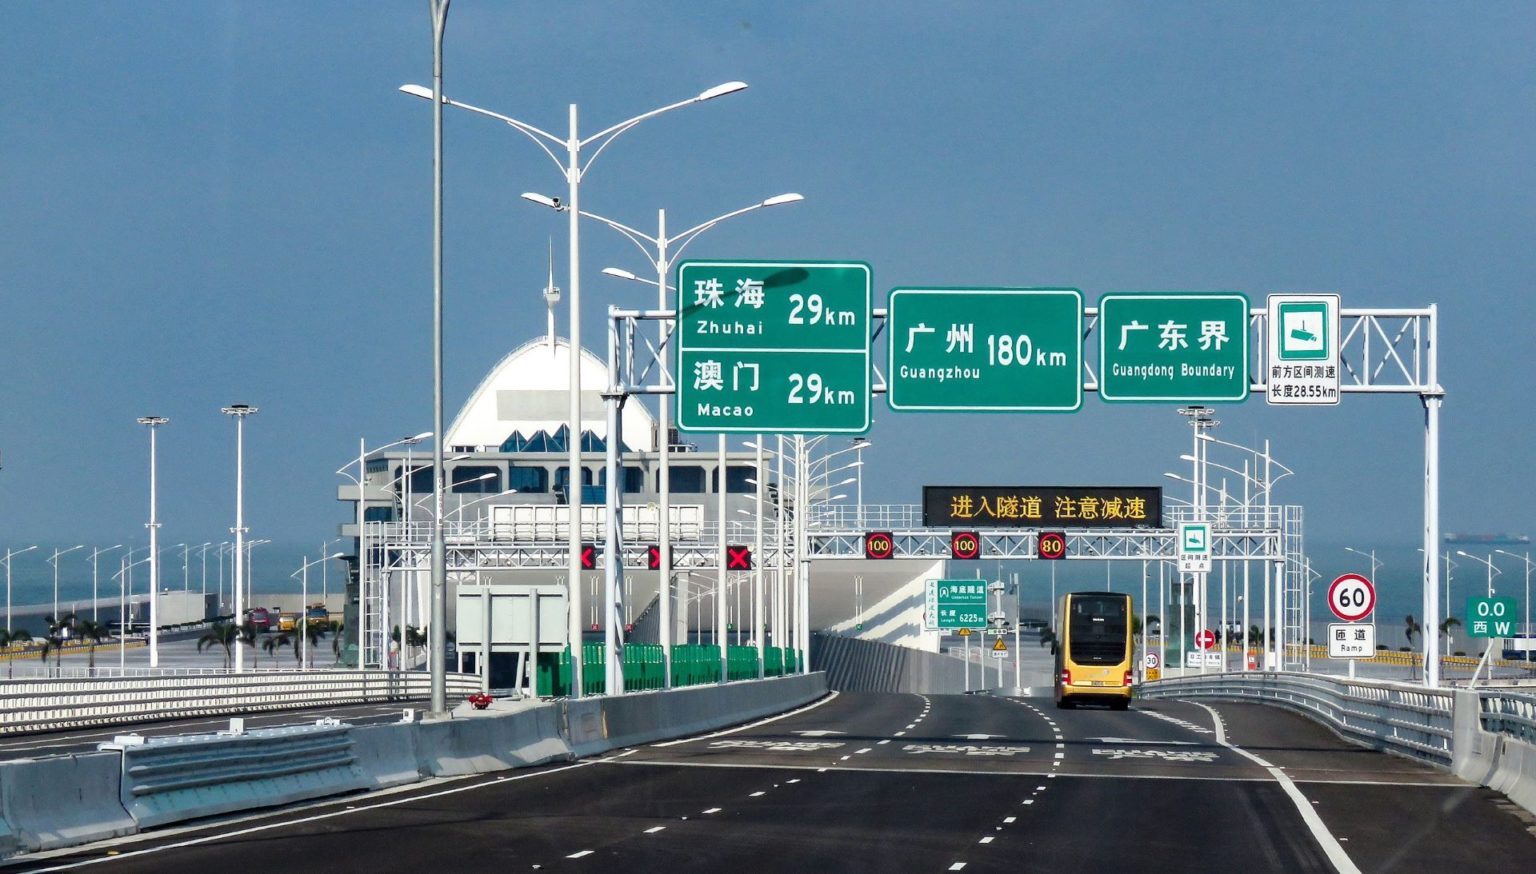 The Hong Kong-Zhuhai-Macau Bridge